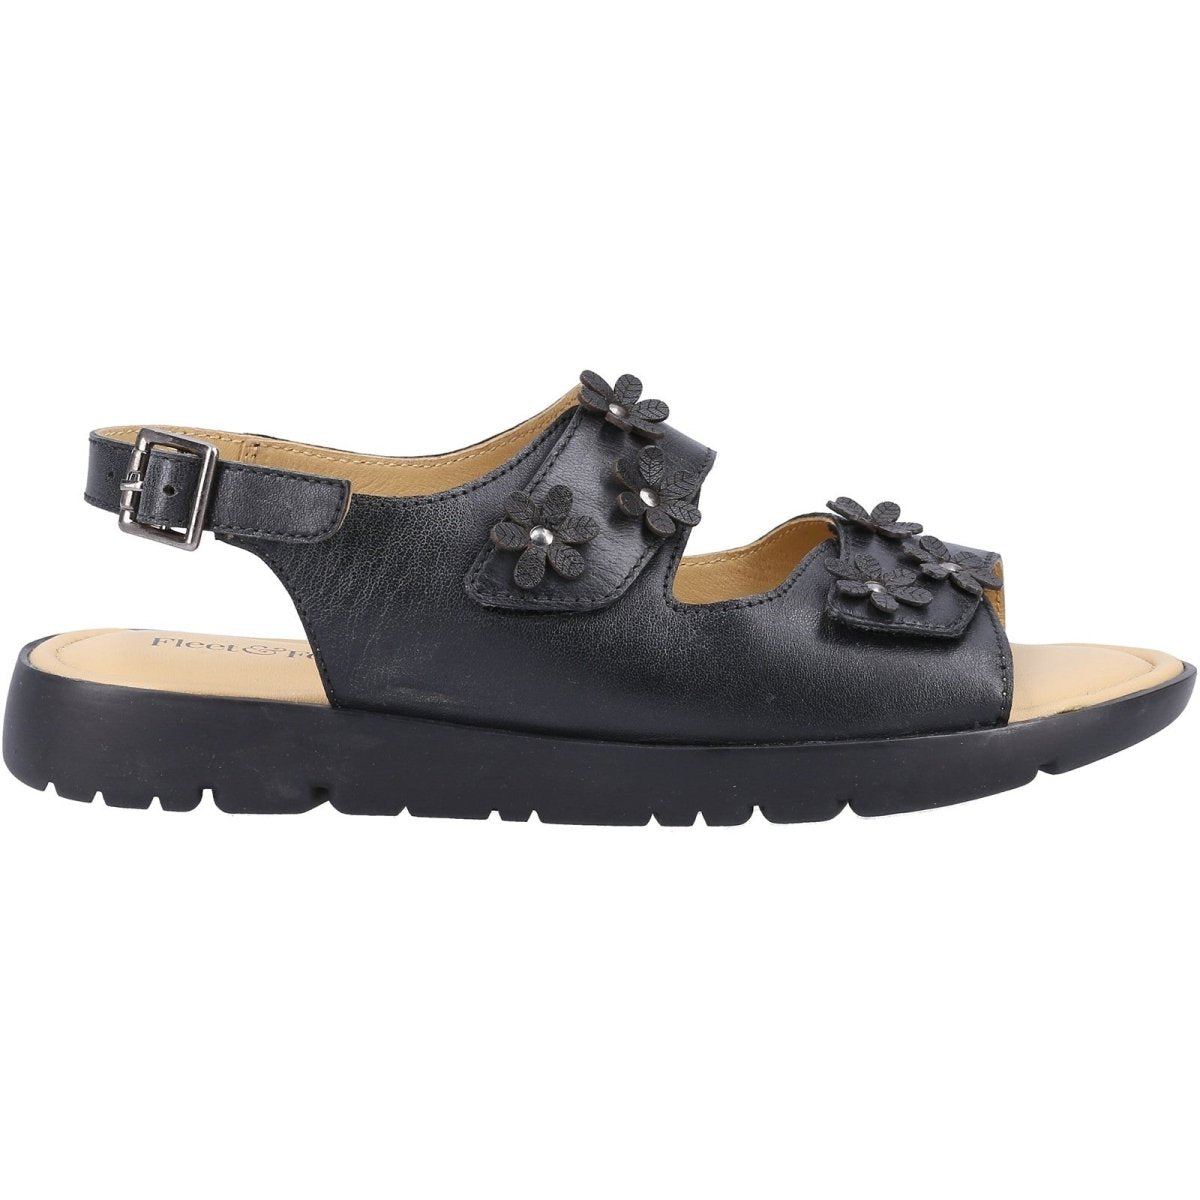 Fleet & Foster Kara Ladies Open-Toe Leather Summer Sandals - Shoe Store Direct